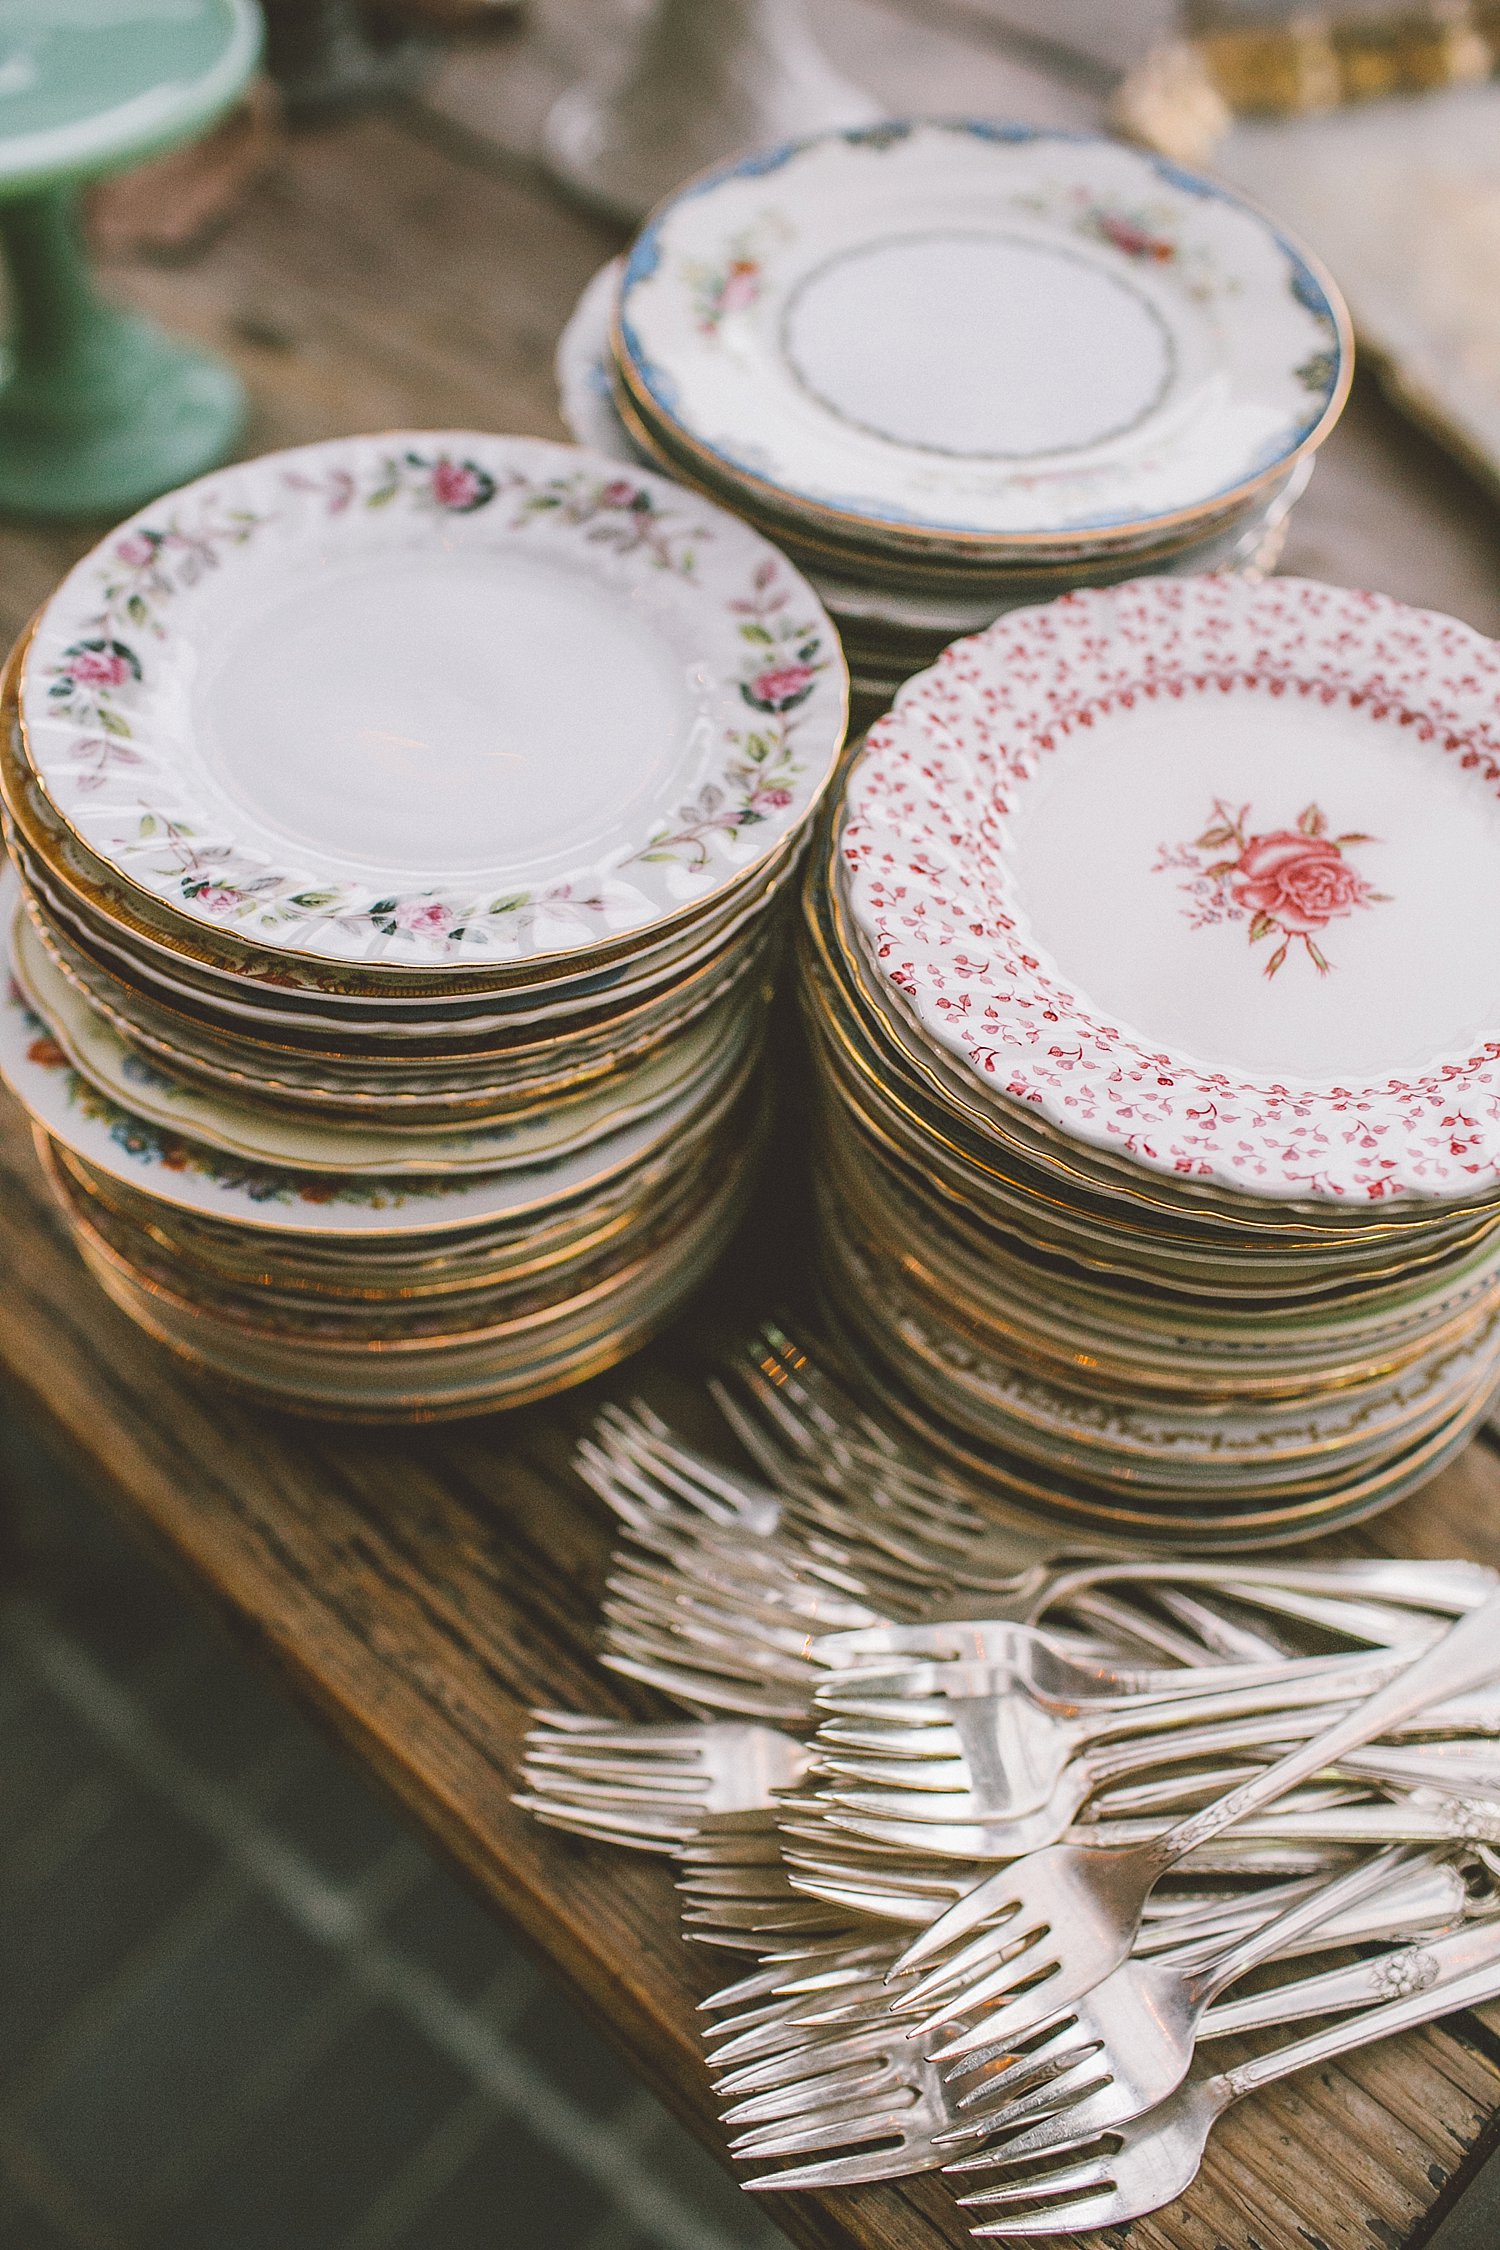 vintage dessert plates china dishes at wedding